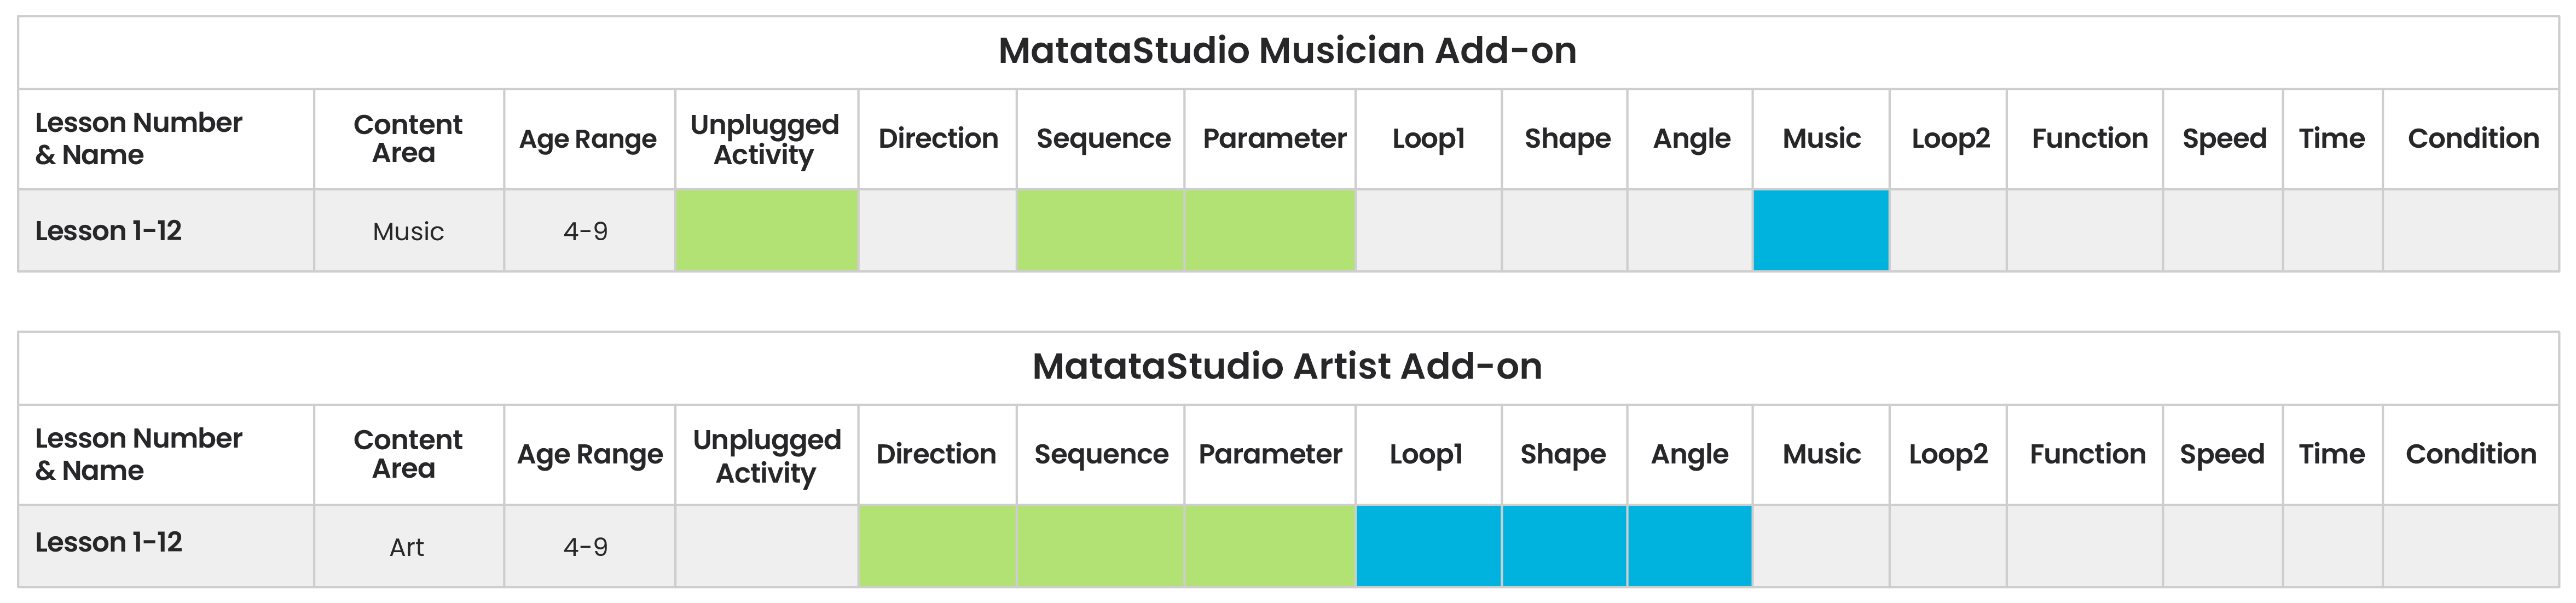 Matatalab music add on coding toys - Matatalab